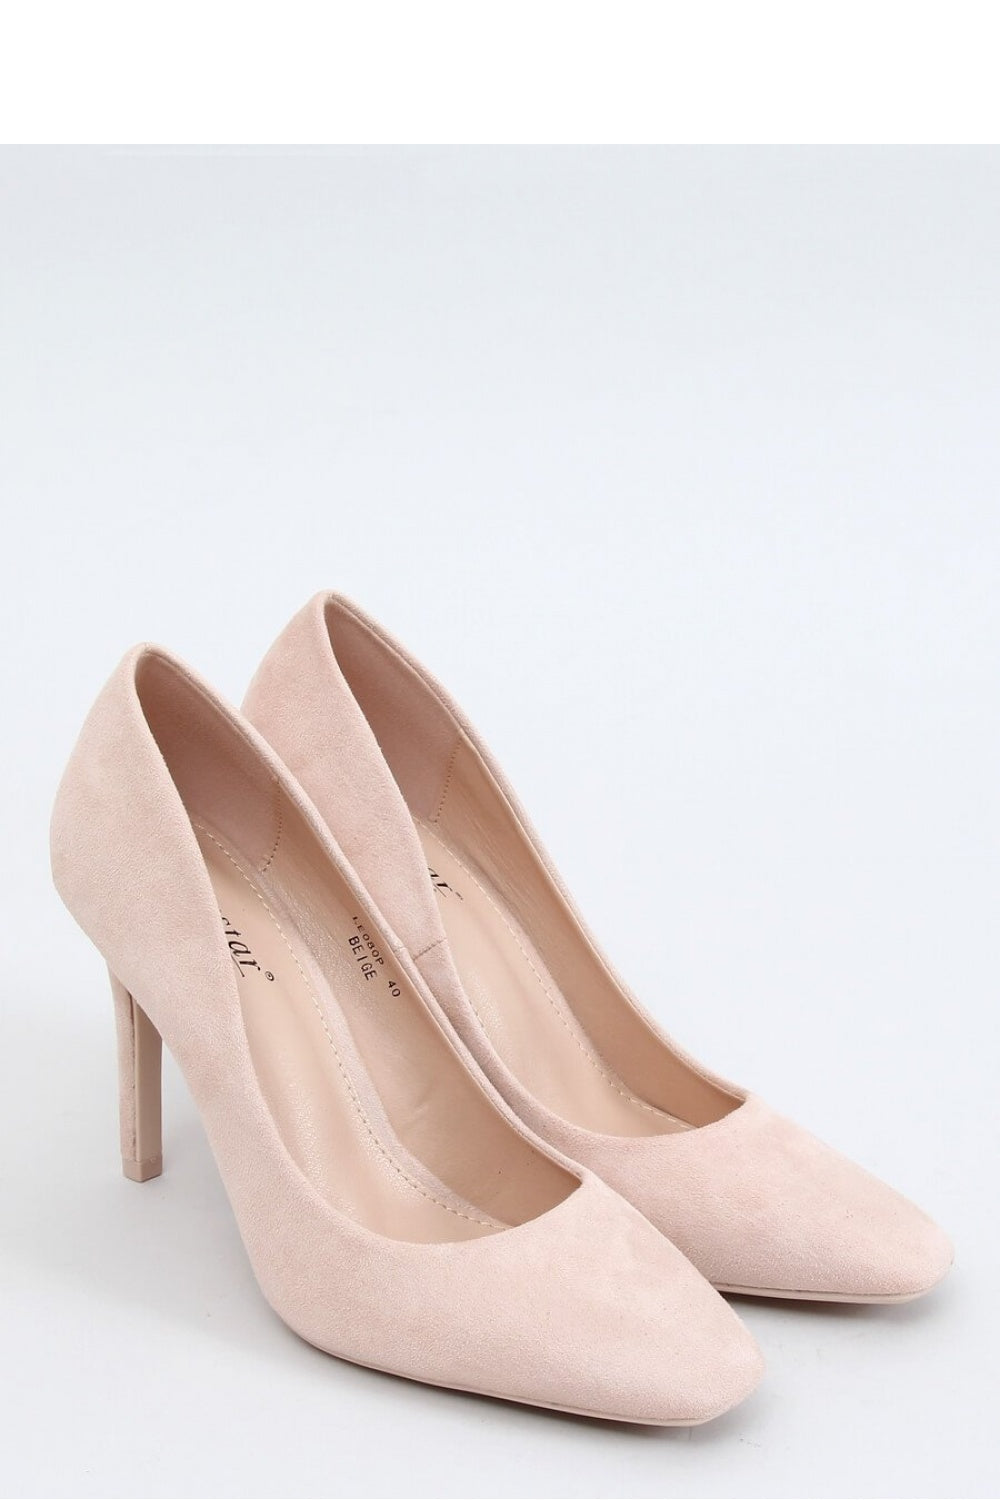 High heels model 153397 Inello Posh Styles Apparel